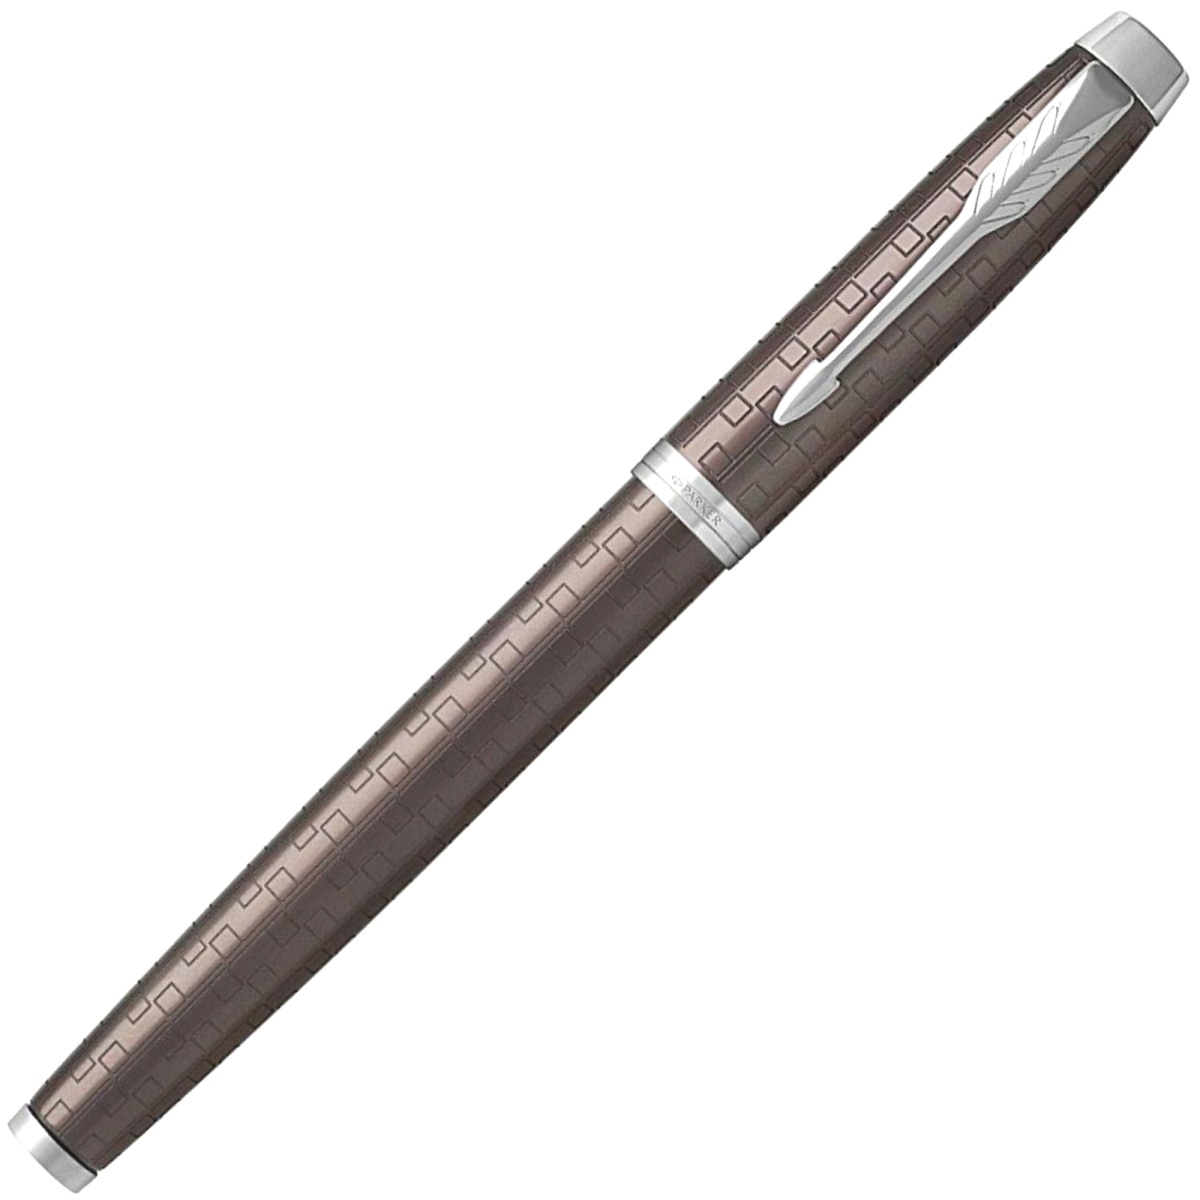  Перьевая ручка Parker IM Premium F324, Brown CT (Перо F), фото 2